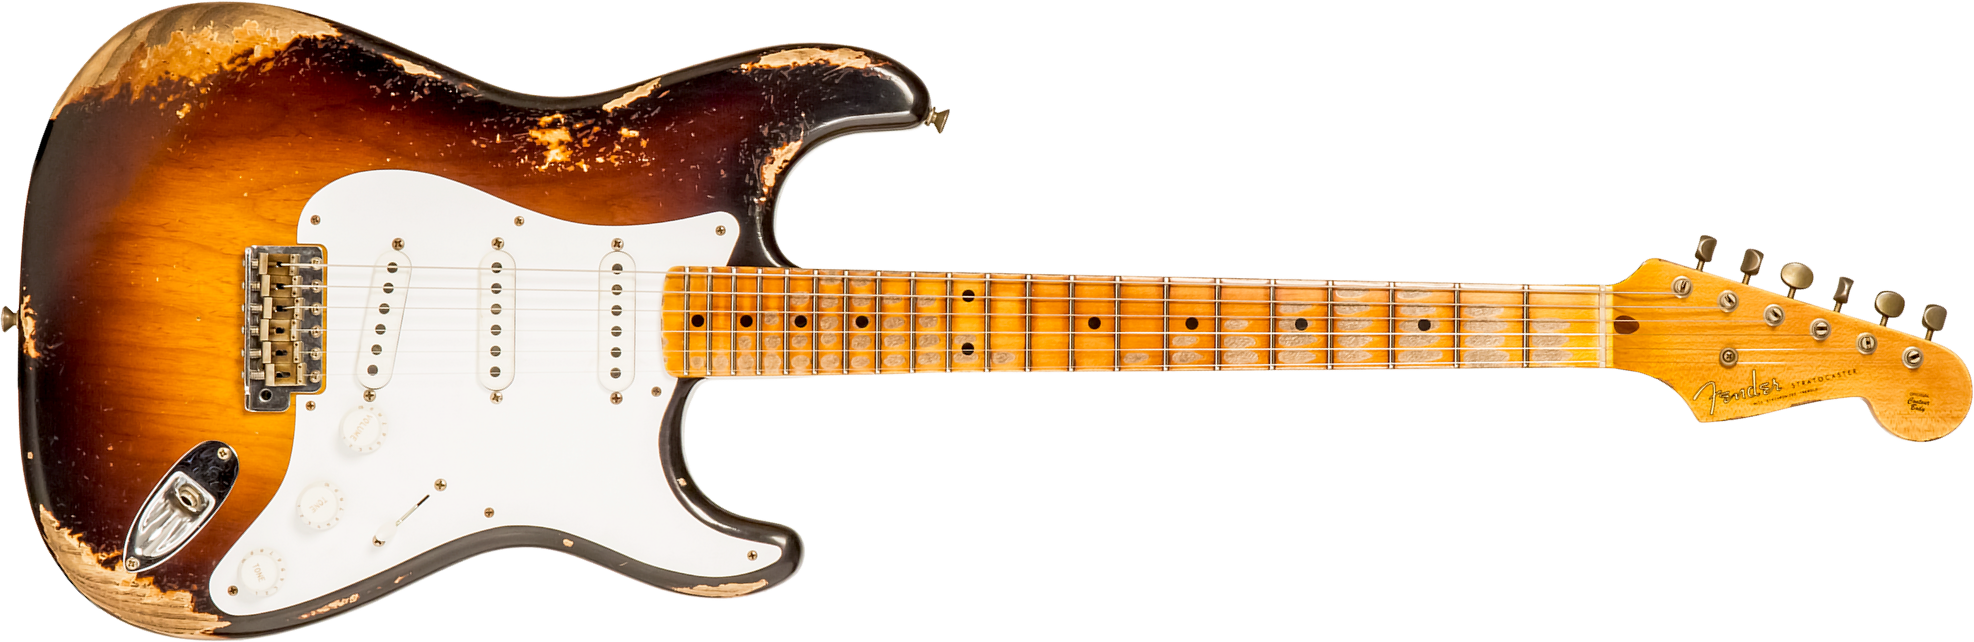 Fender Custom Shop Strat 1954 70th Anniv. 3s Trem Mn #xn4324 - Heavy Relic Wide Fade 2-color Sunburst - Elektrische gitaar in Str-vorm - Main picture